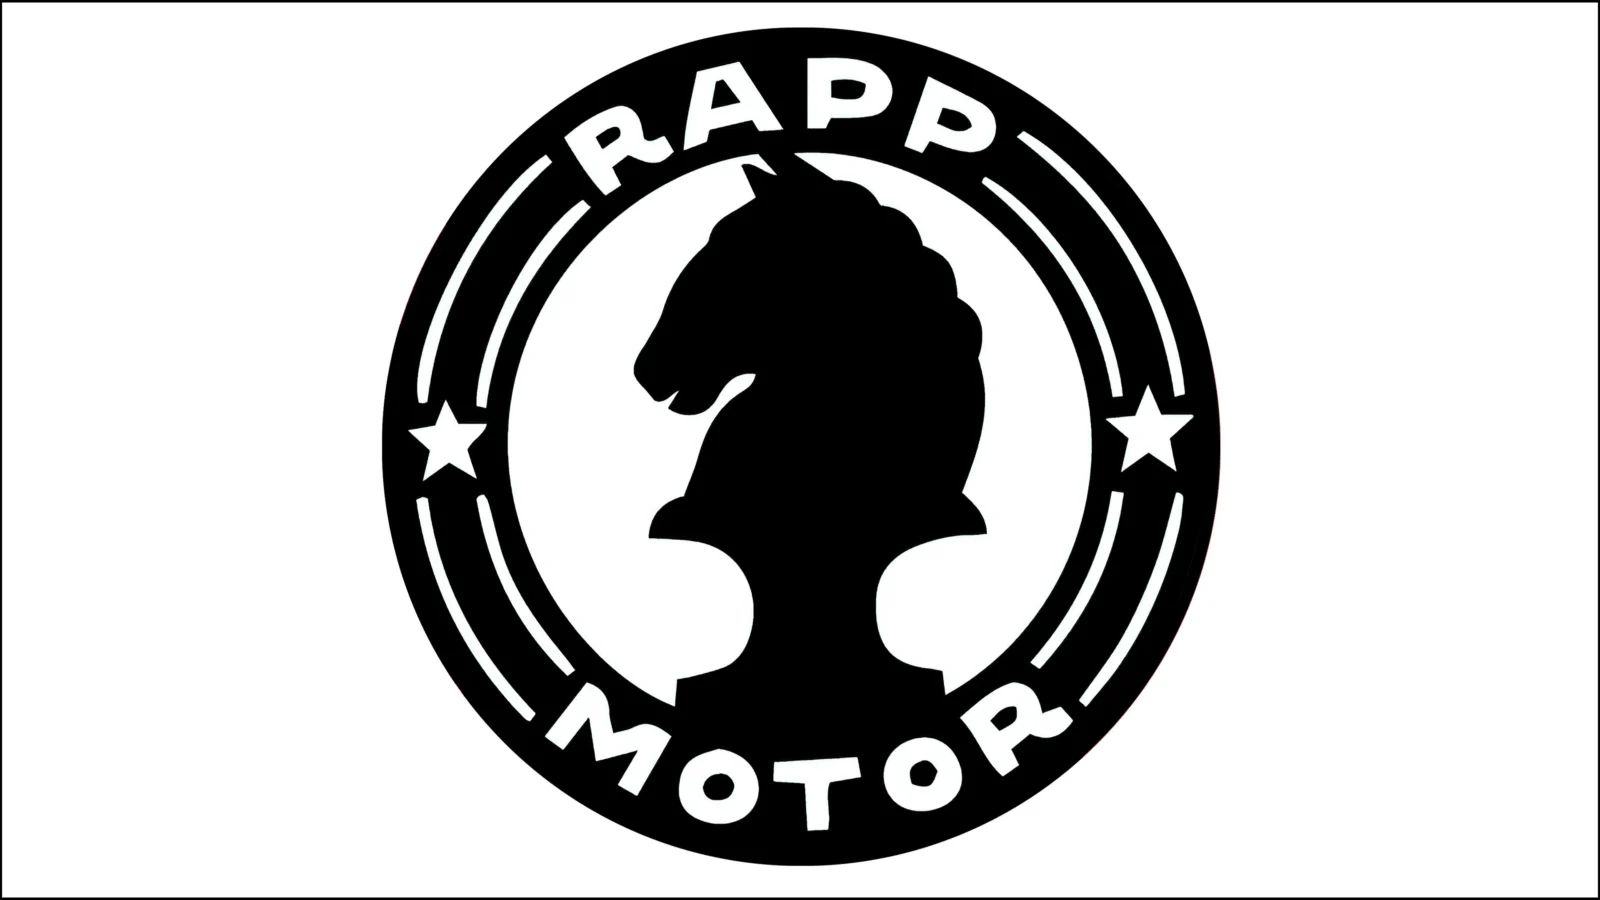 RAPP MOTOR 